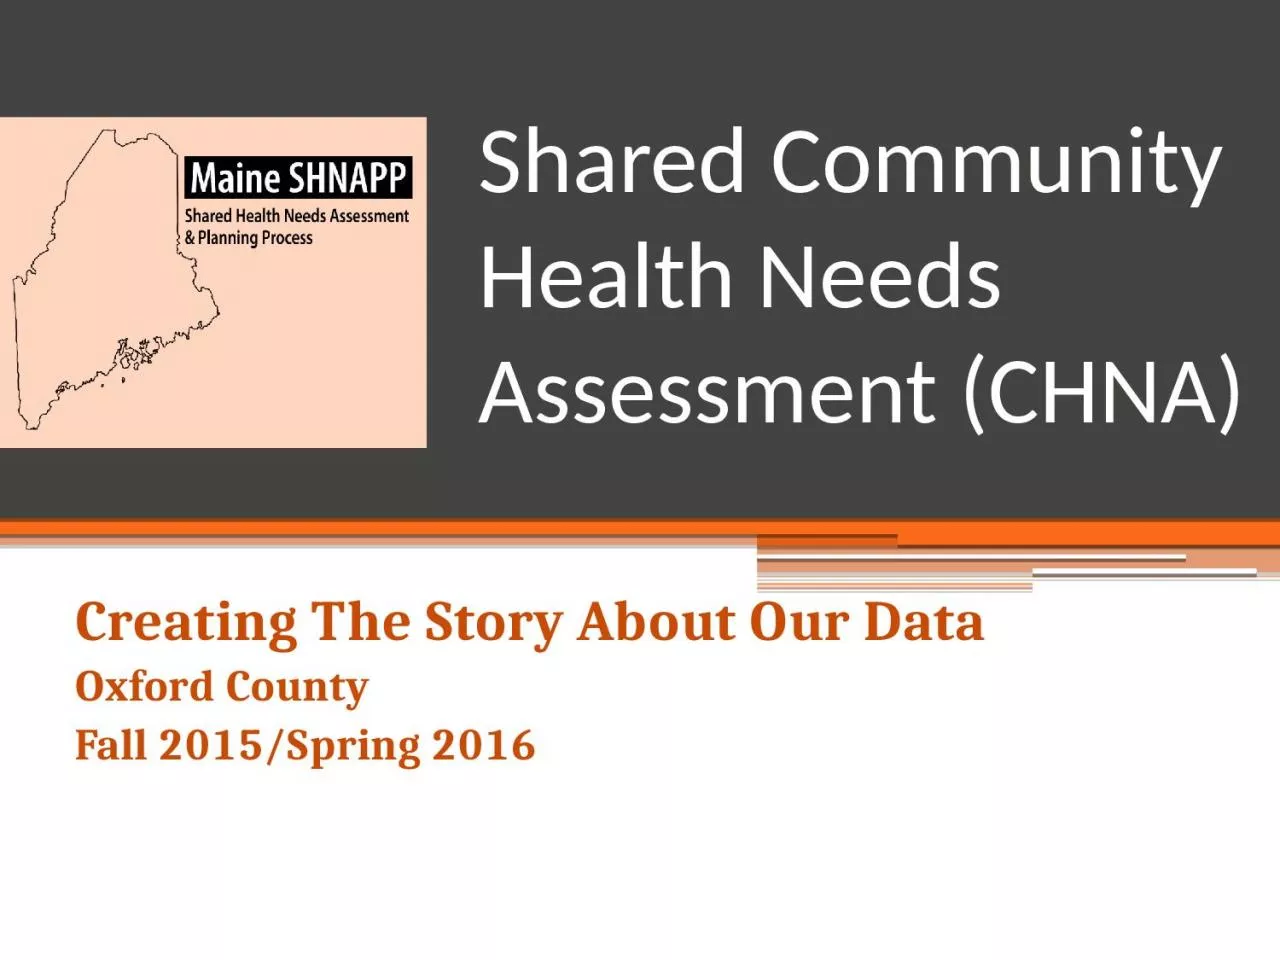 Shared Community Health Needs Assessment (CHNA)